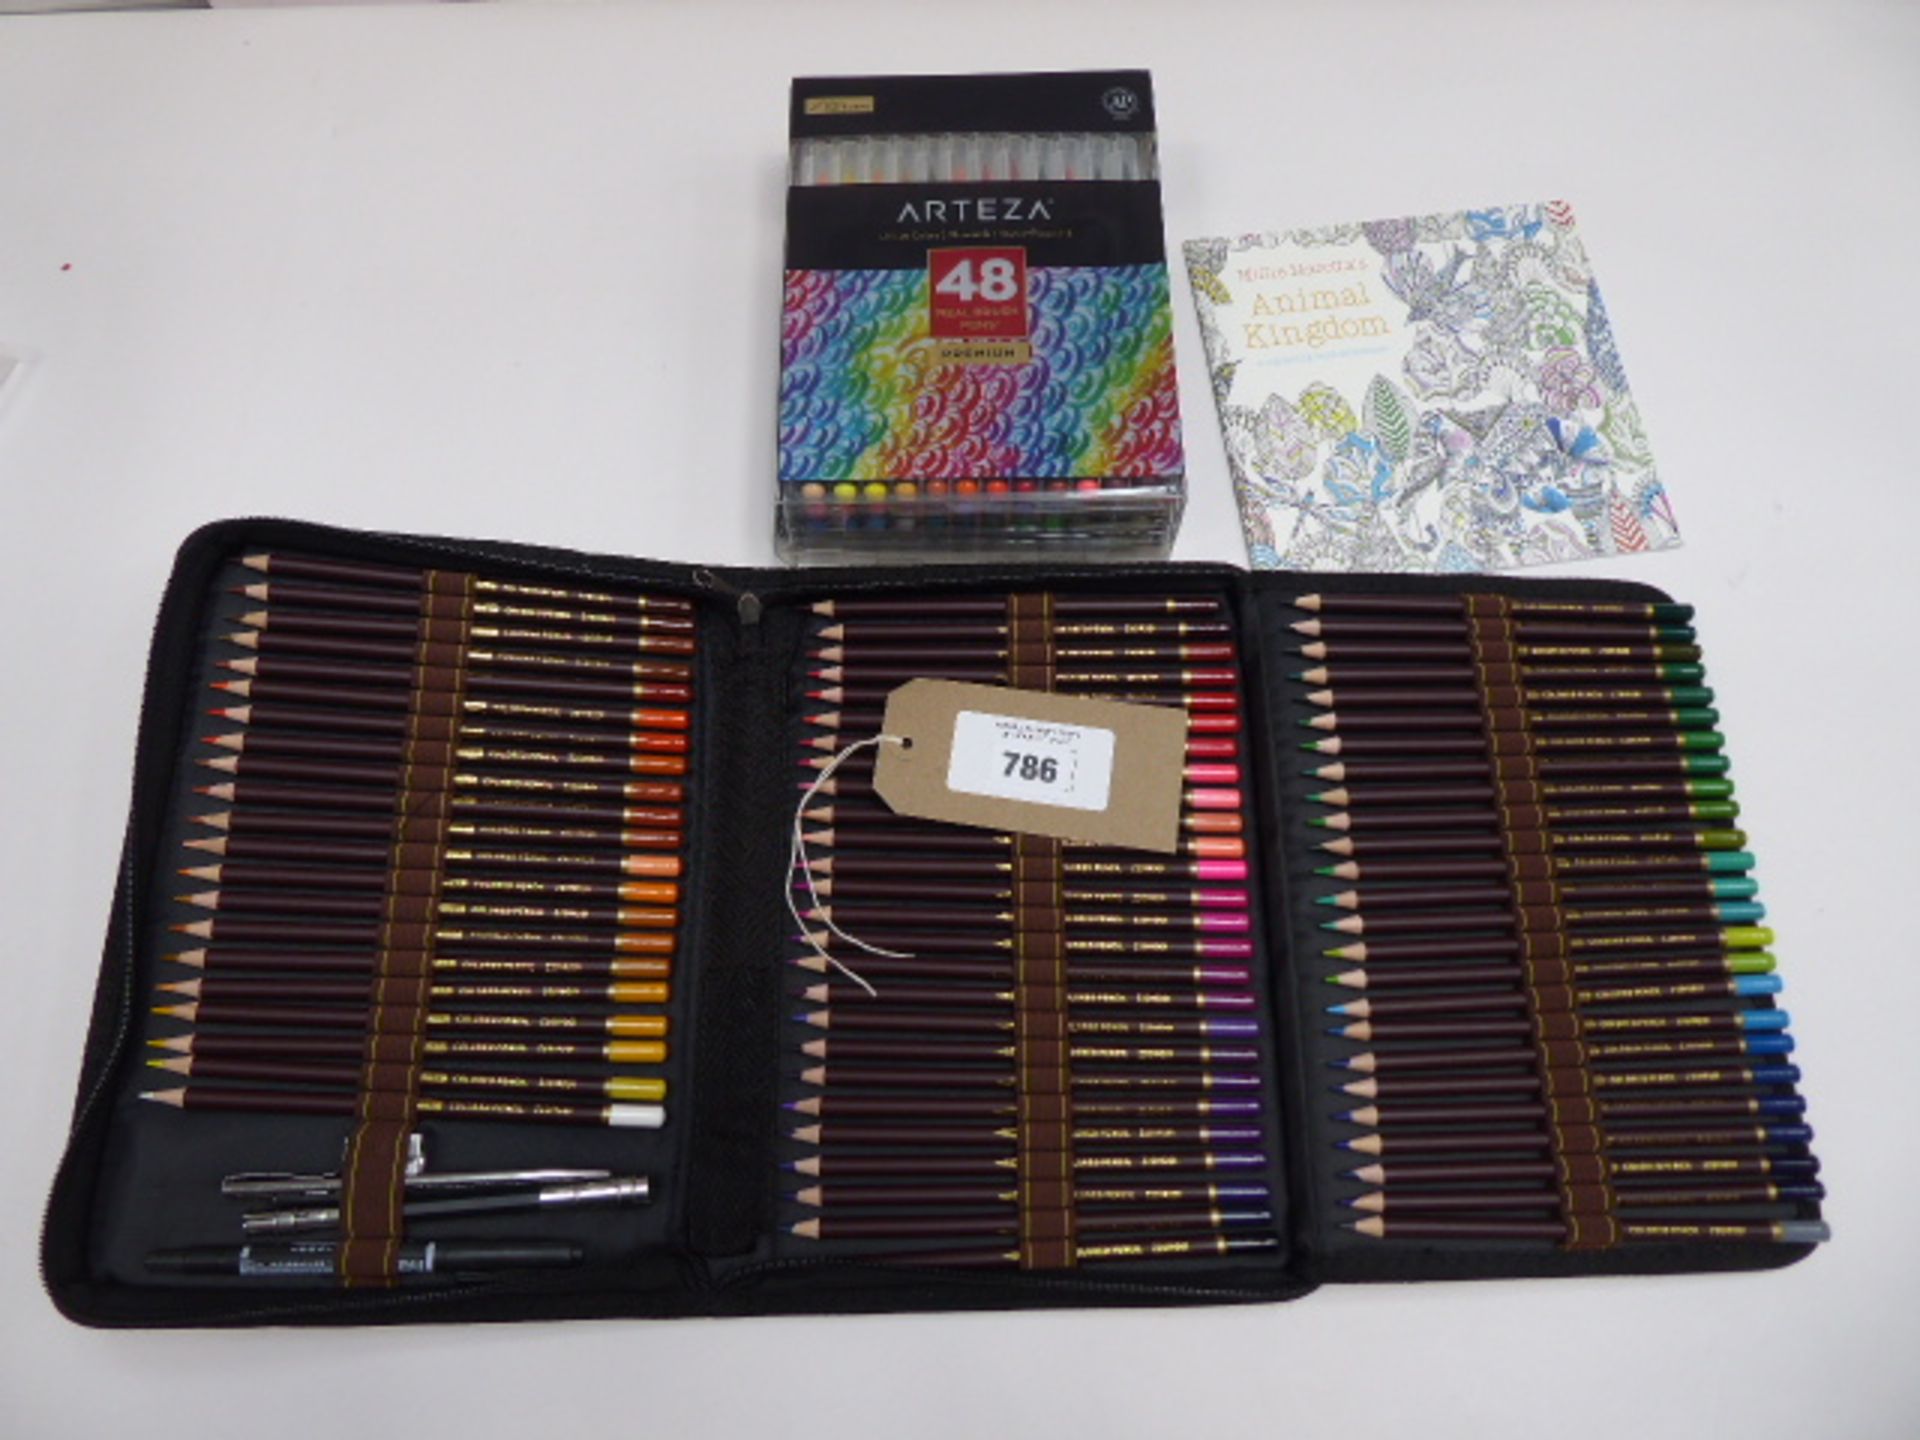 Arteza 48 colour pencils and Millie Marotta's Animal Kingdom colour pencil set